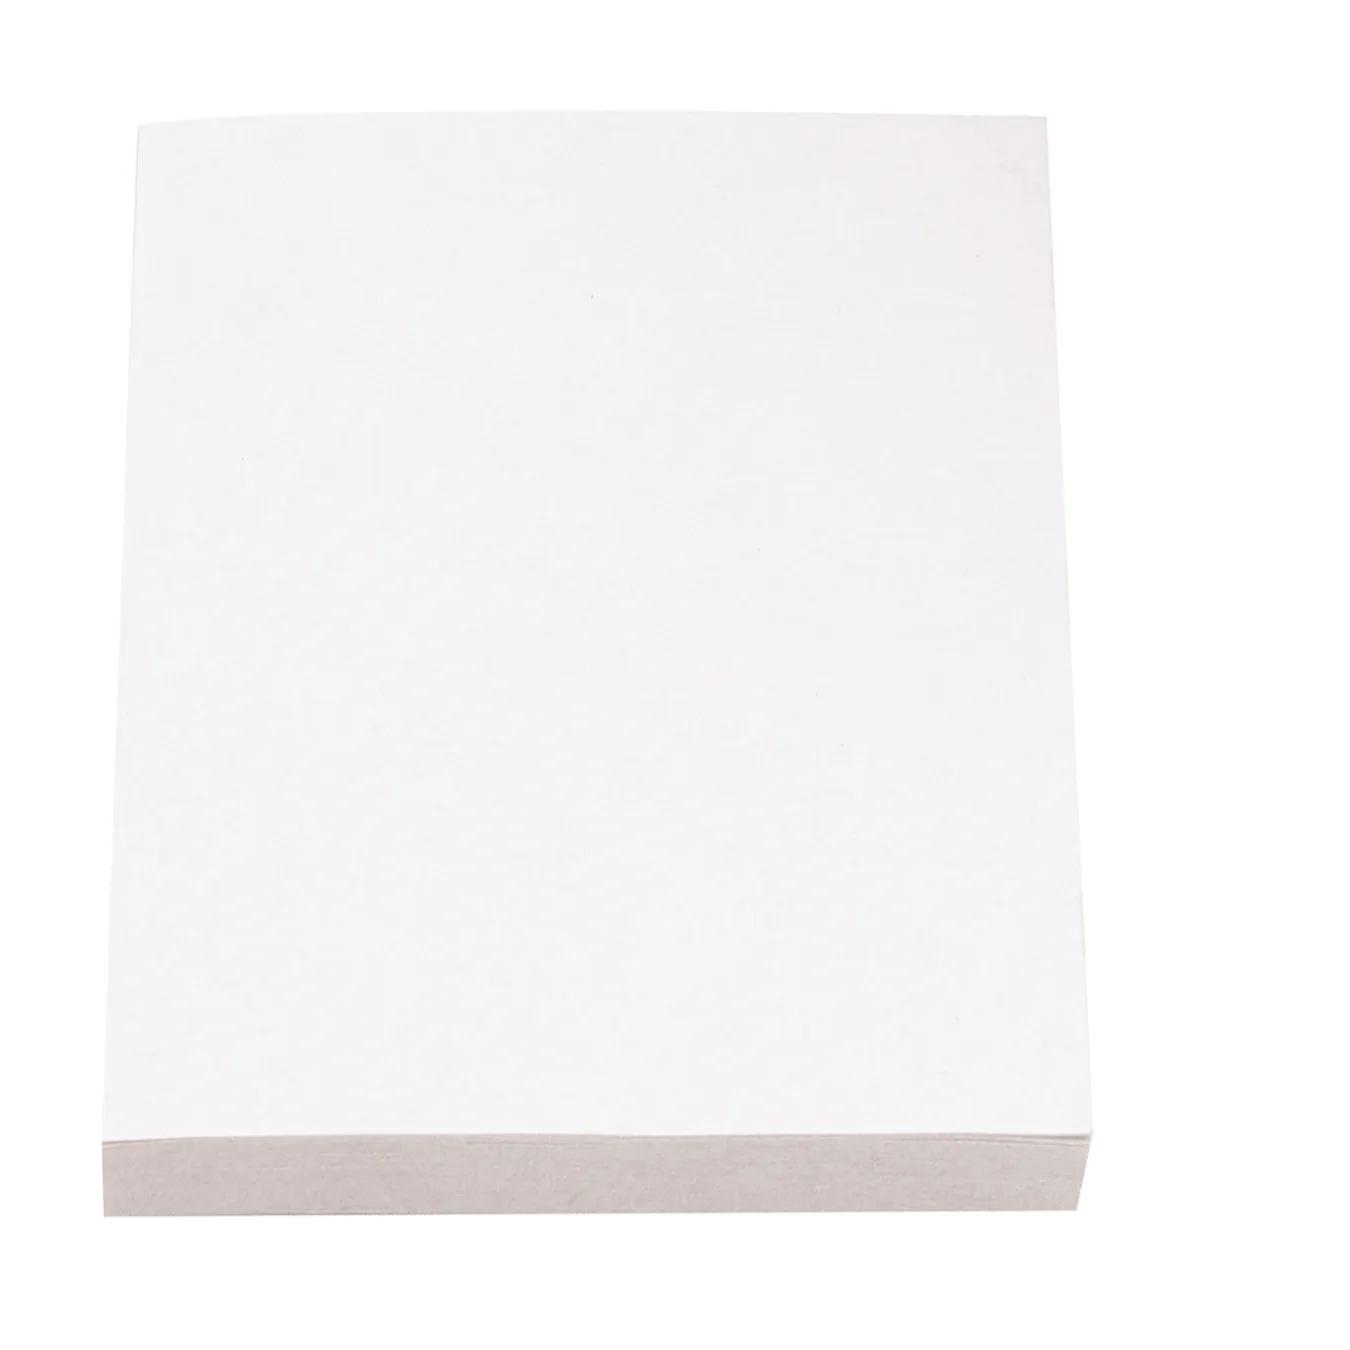 Souvenir® Sticky Note™ 2-1/2" x 3" Pad, 100 sheet 1 of 6